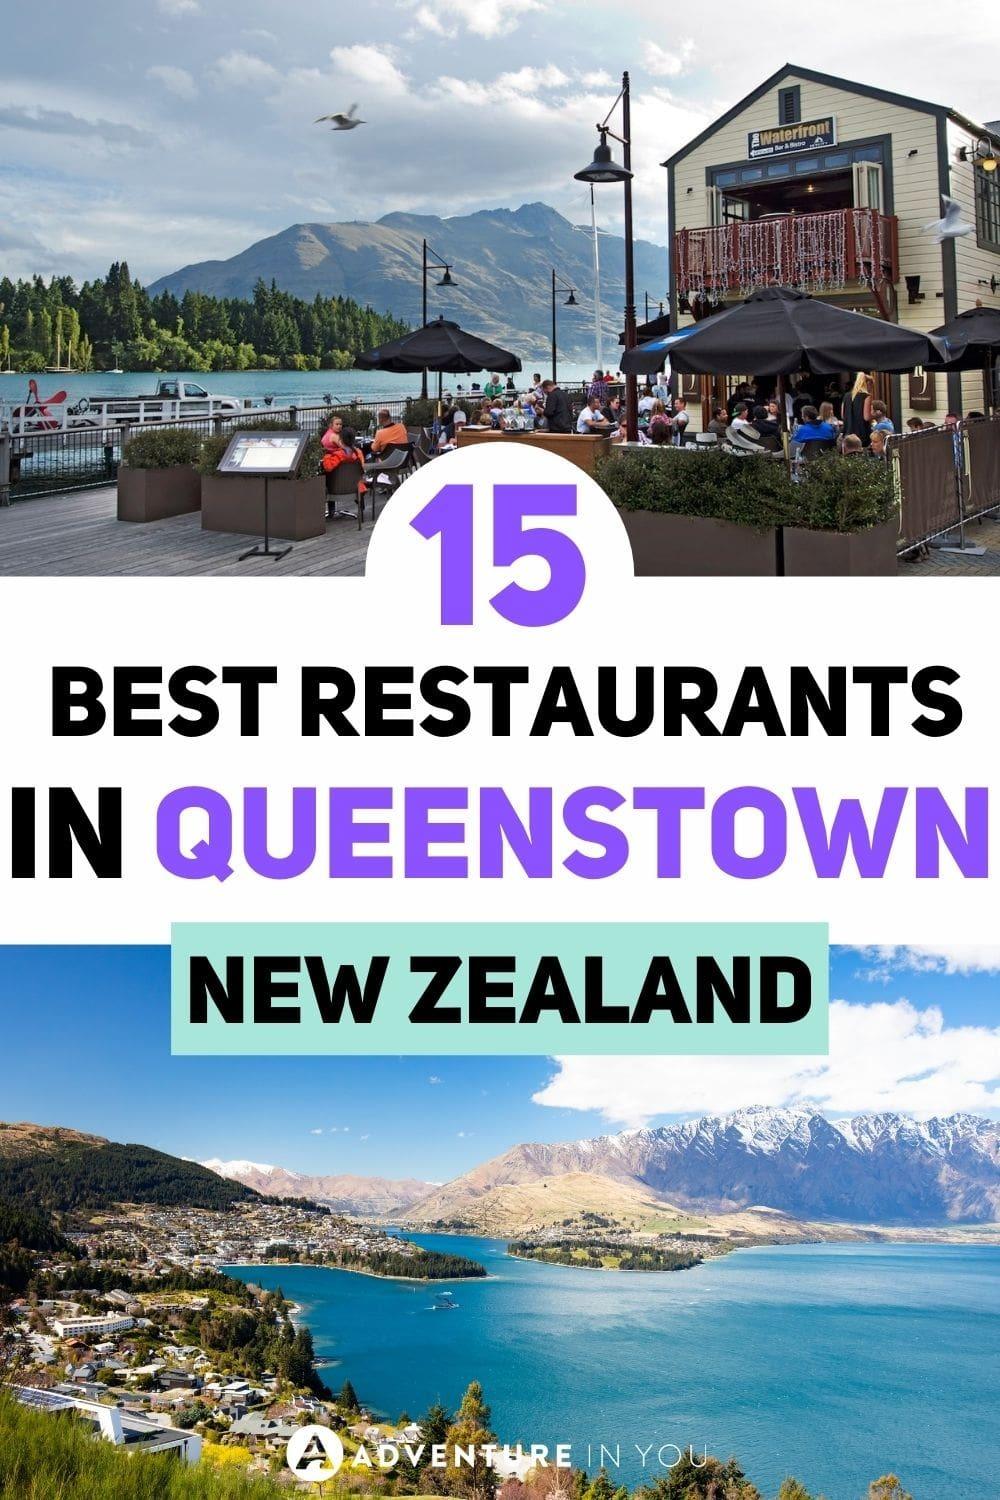 Best Restaurants in Queenstown | Check out these 15 restaurants in Queenstown that offer mouthwatering dishes! #newzealand #queenstown #wheretoeatinqueenstown